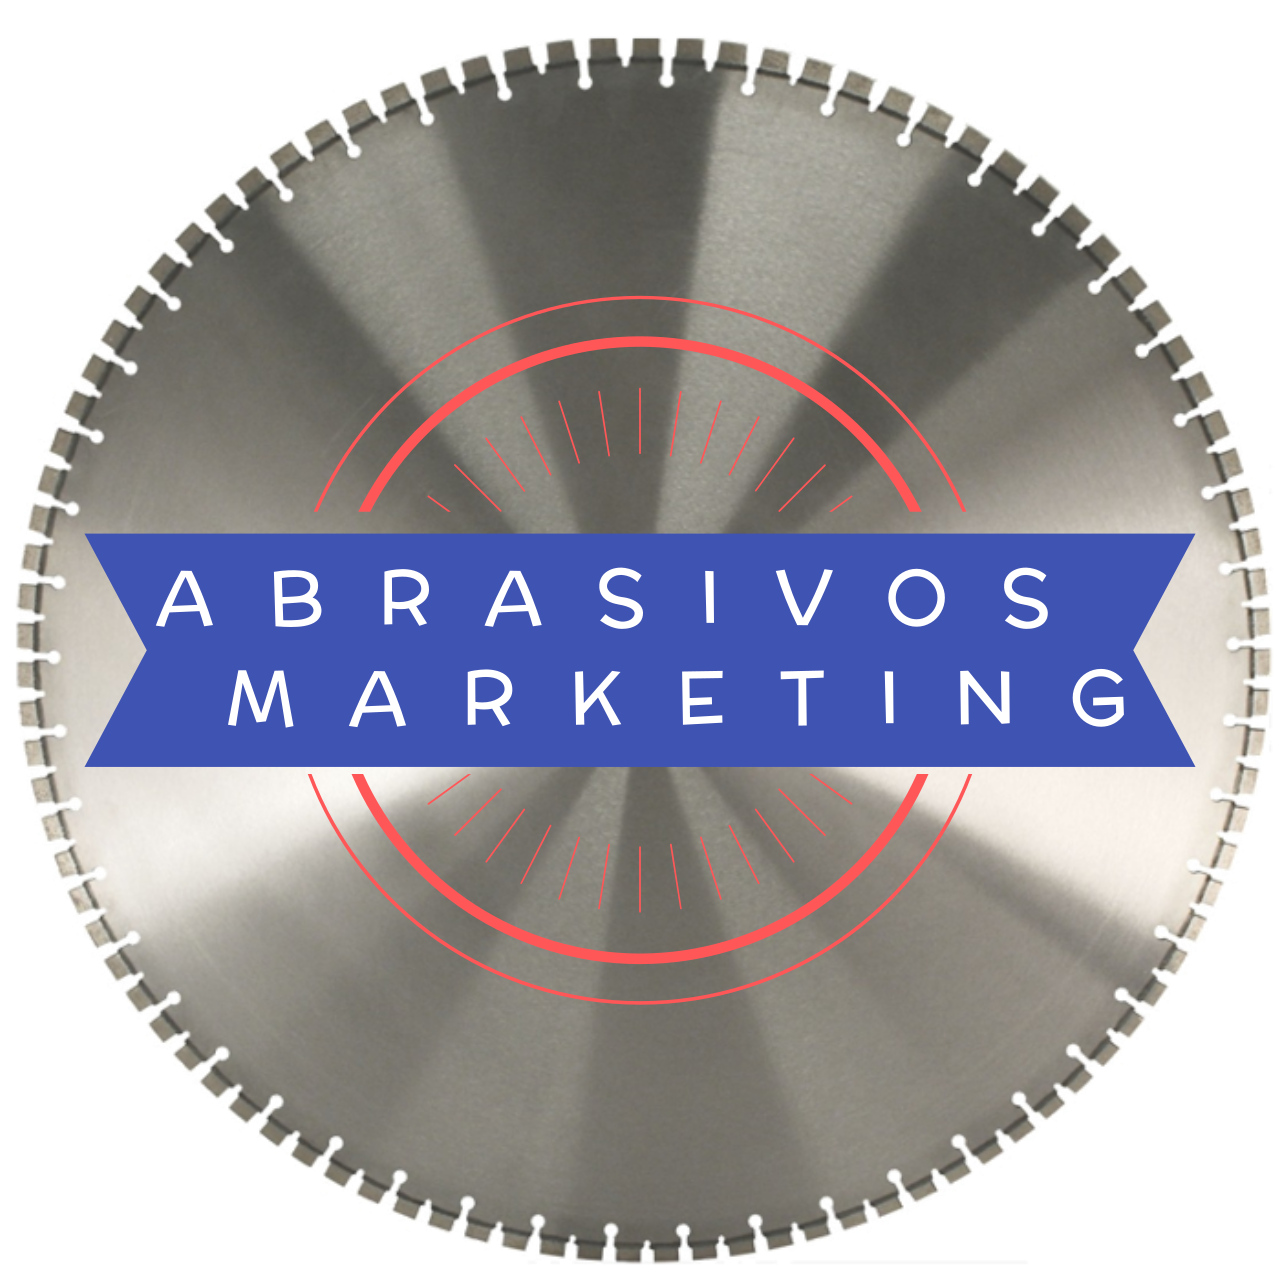 ABRASIVOS MARKETING ENTERPRISE's web page